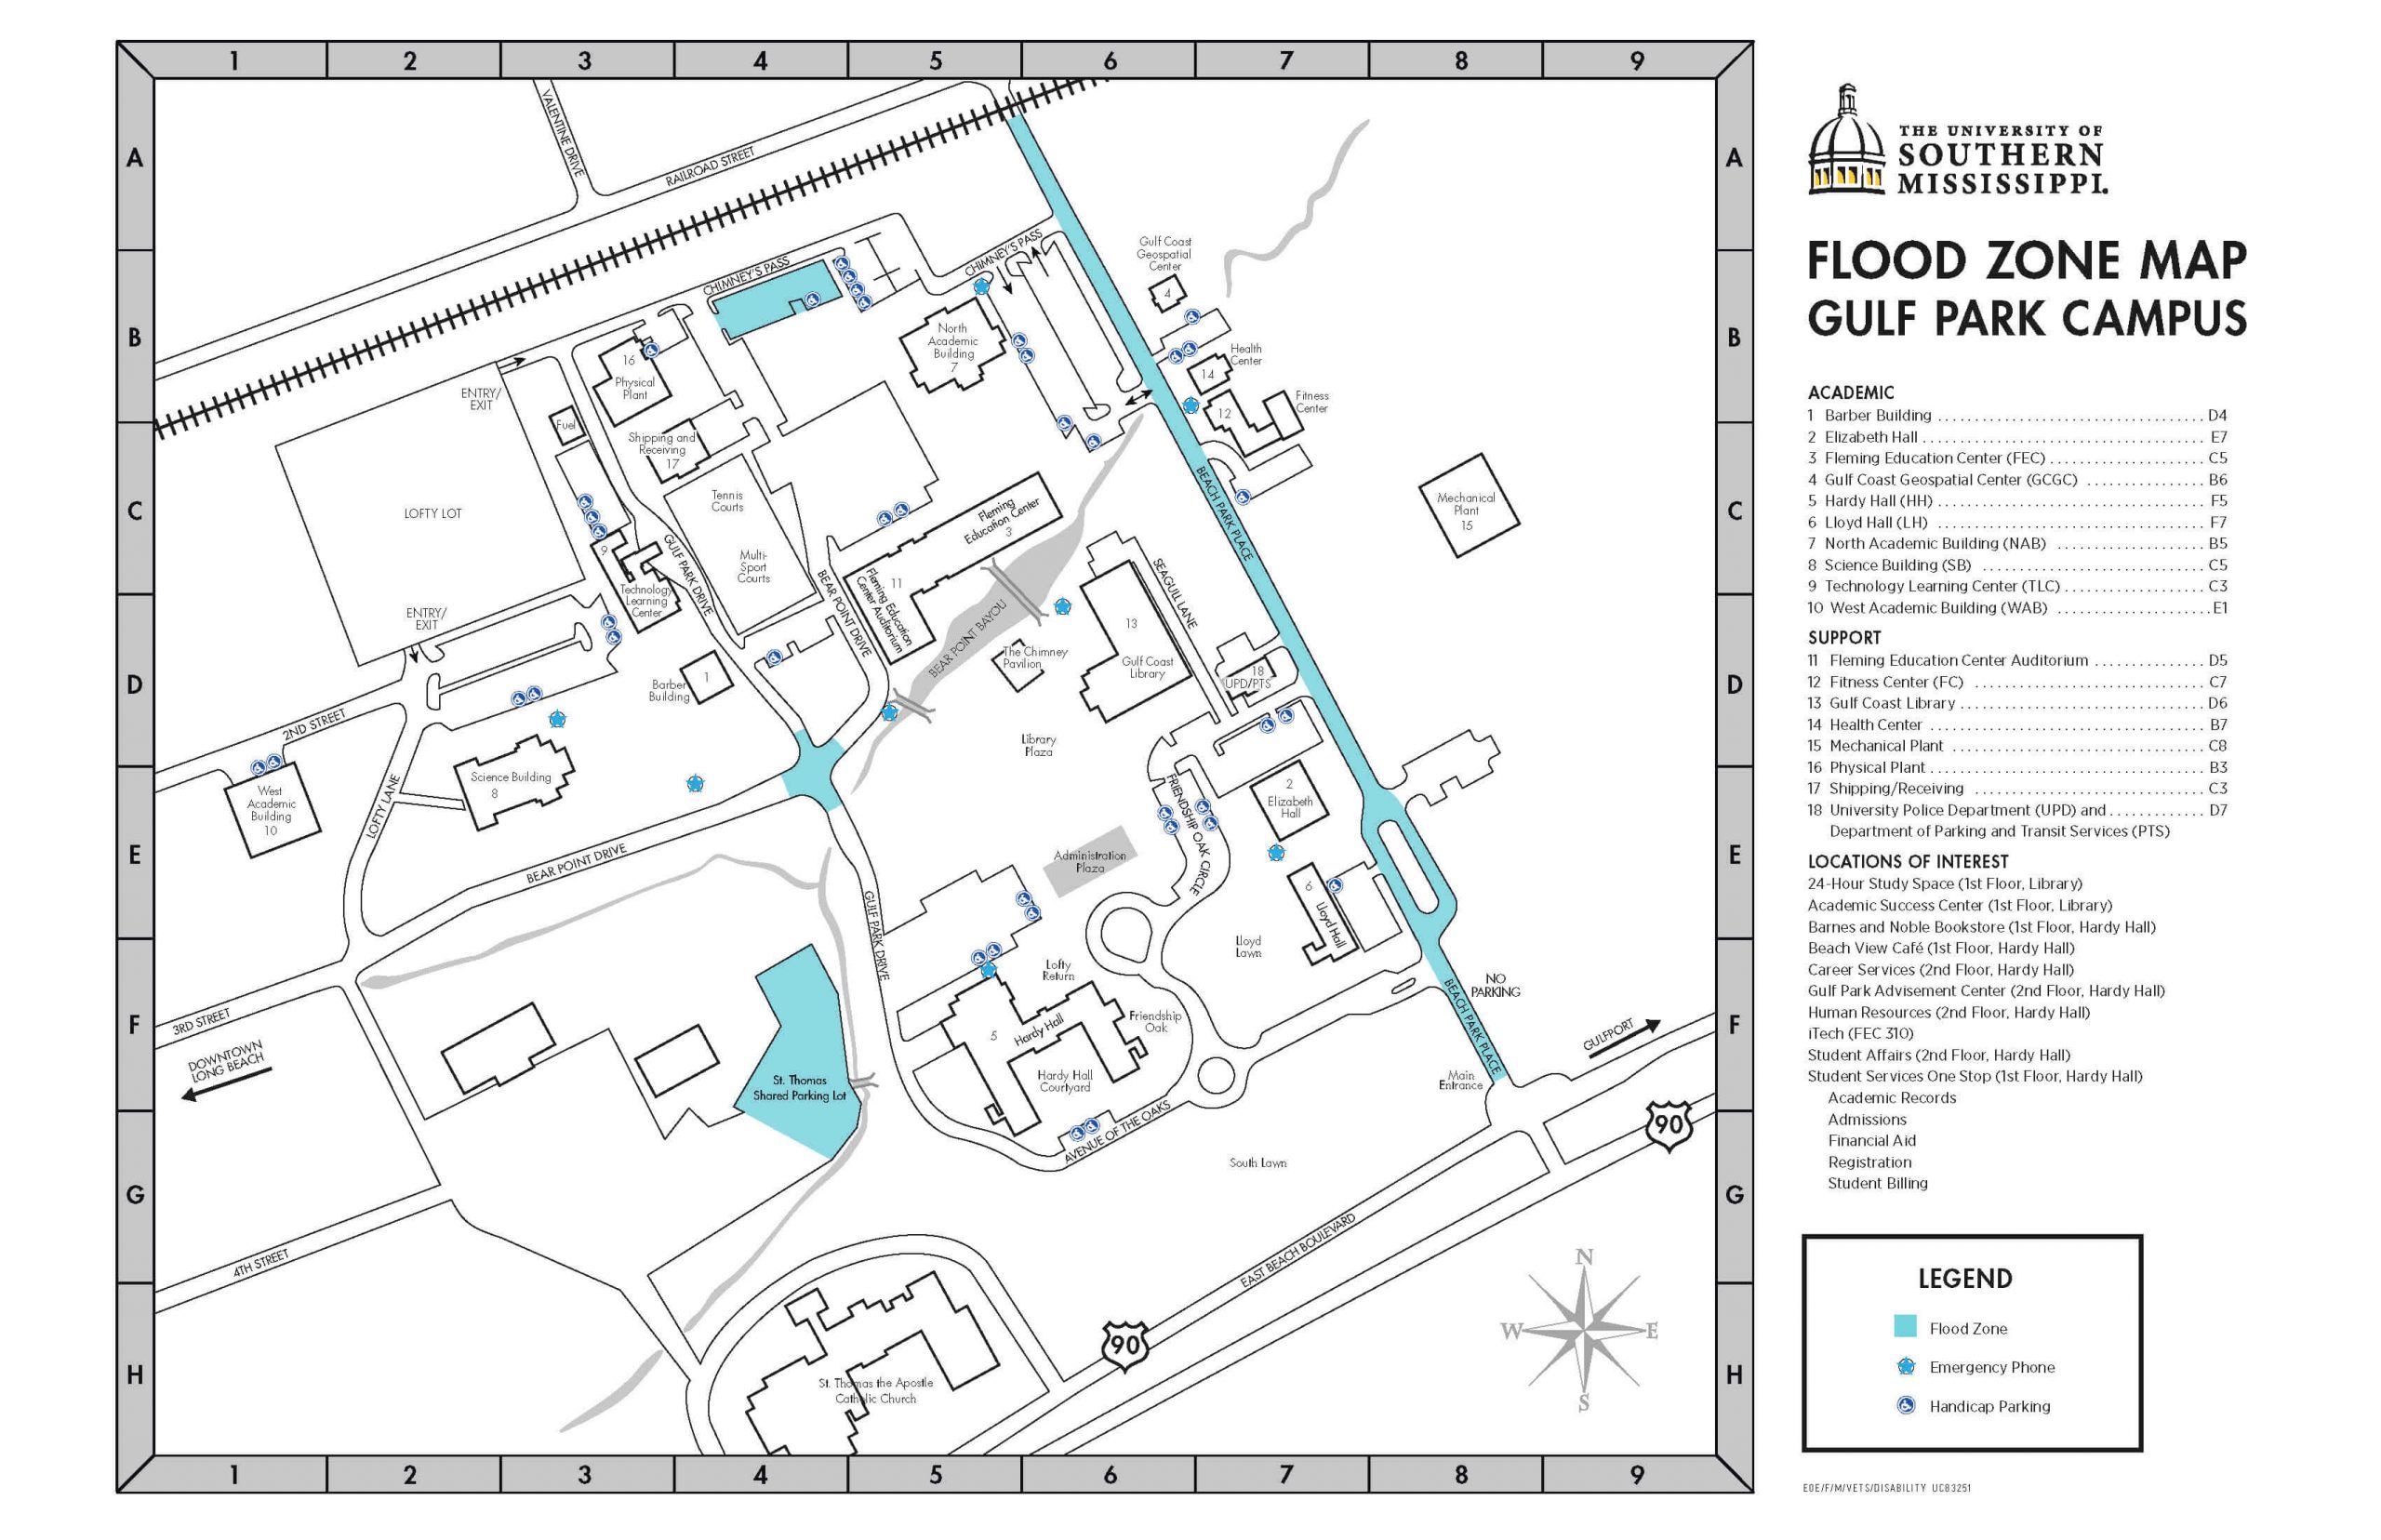 Flood zones on the Gulf Park campus